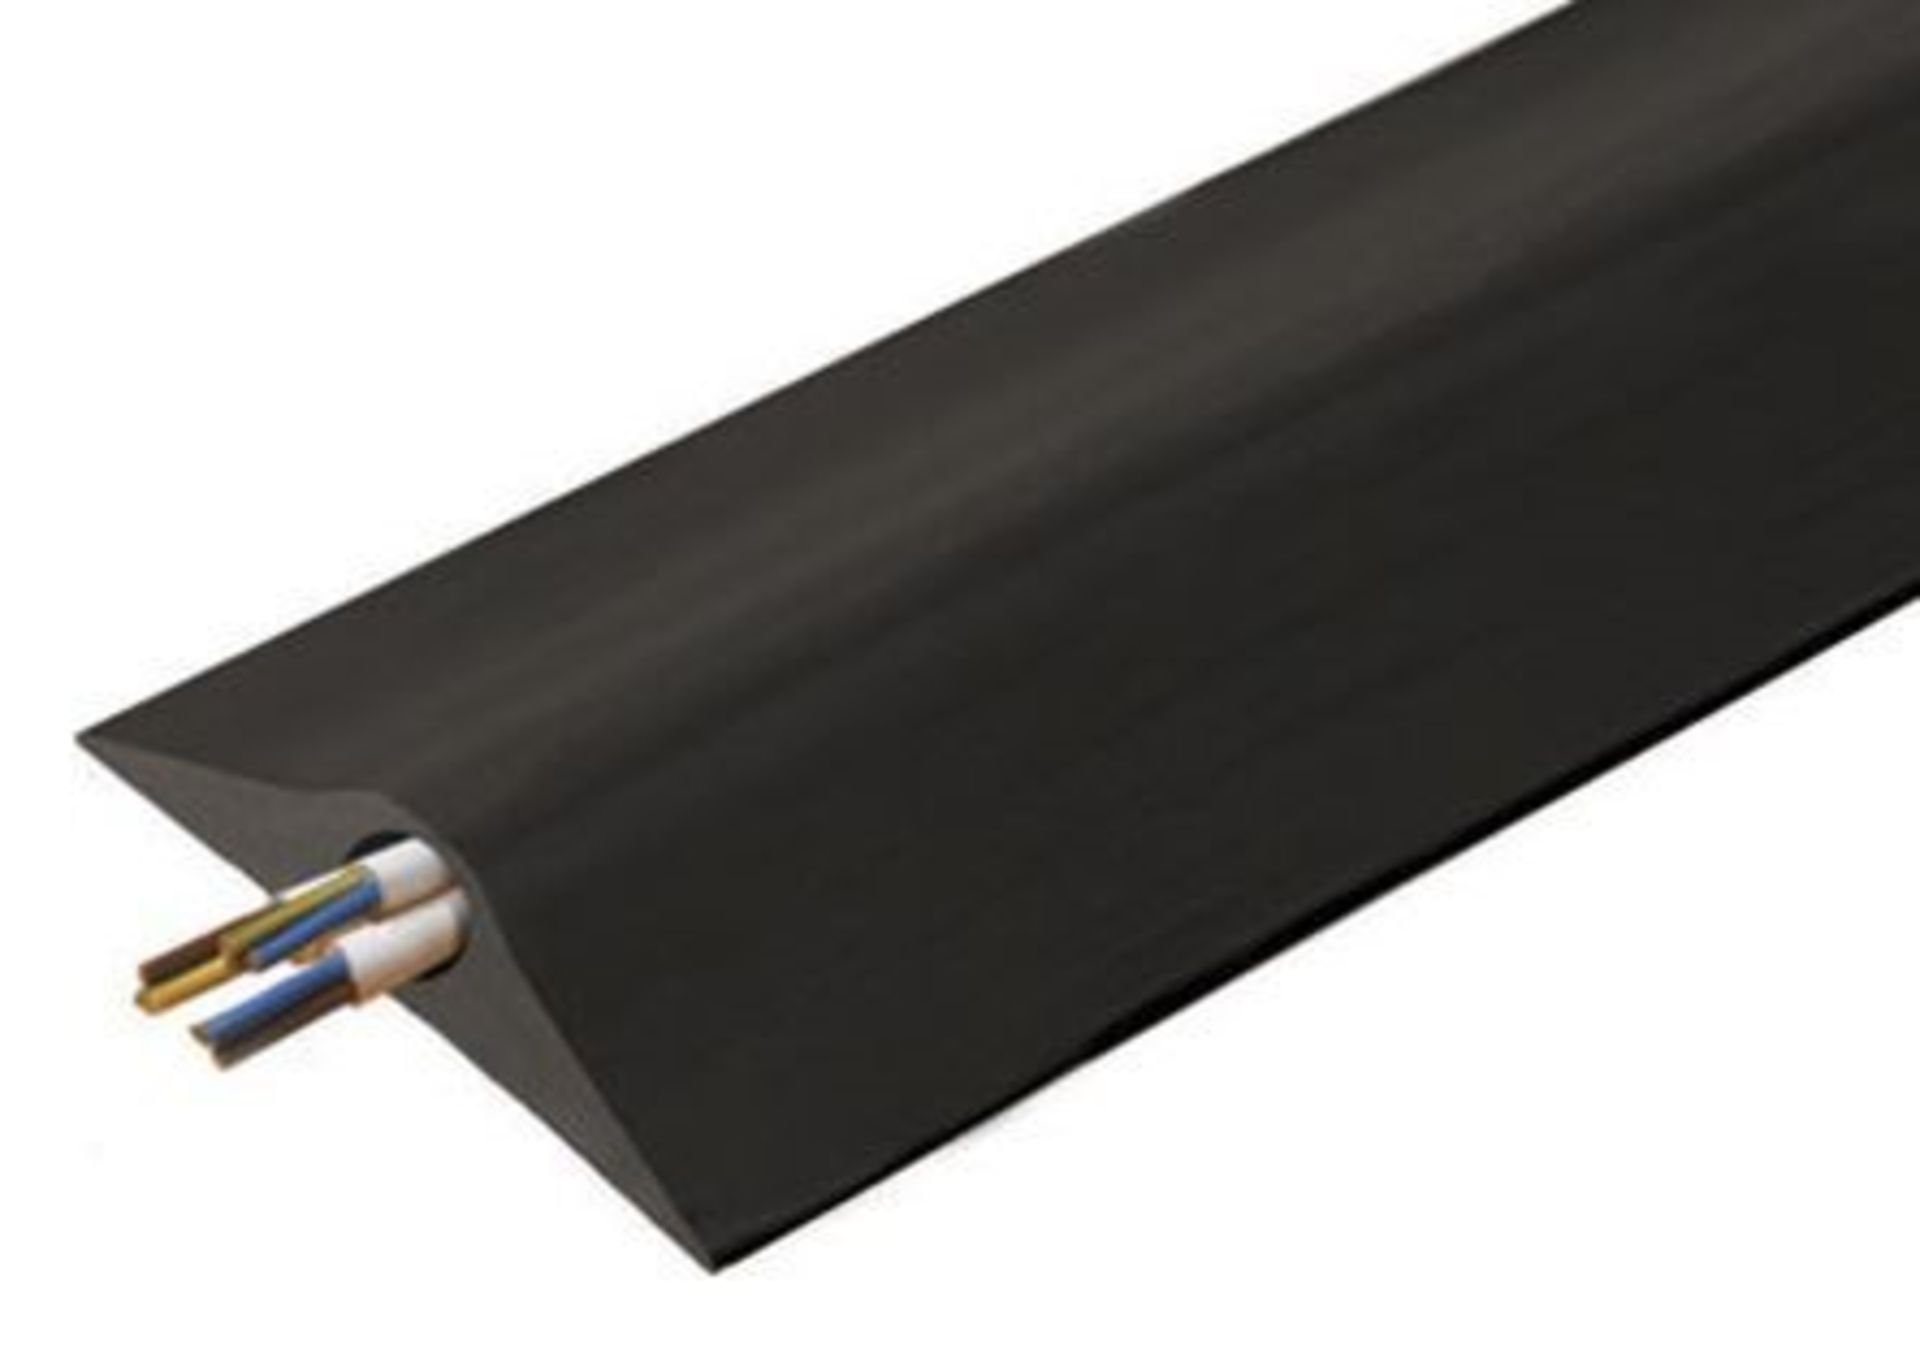 Vulcascot Cable Cover, 53mm (Inside dia.), 270 mm x 2m, Black